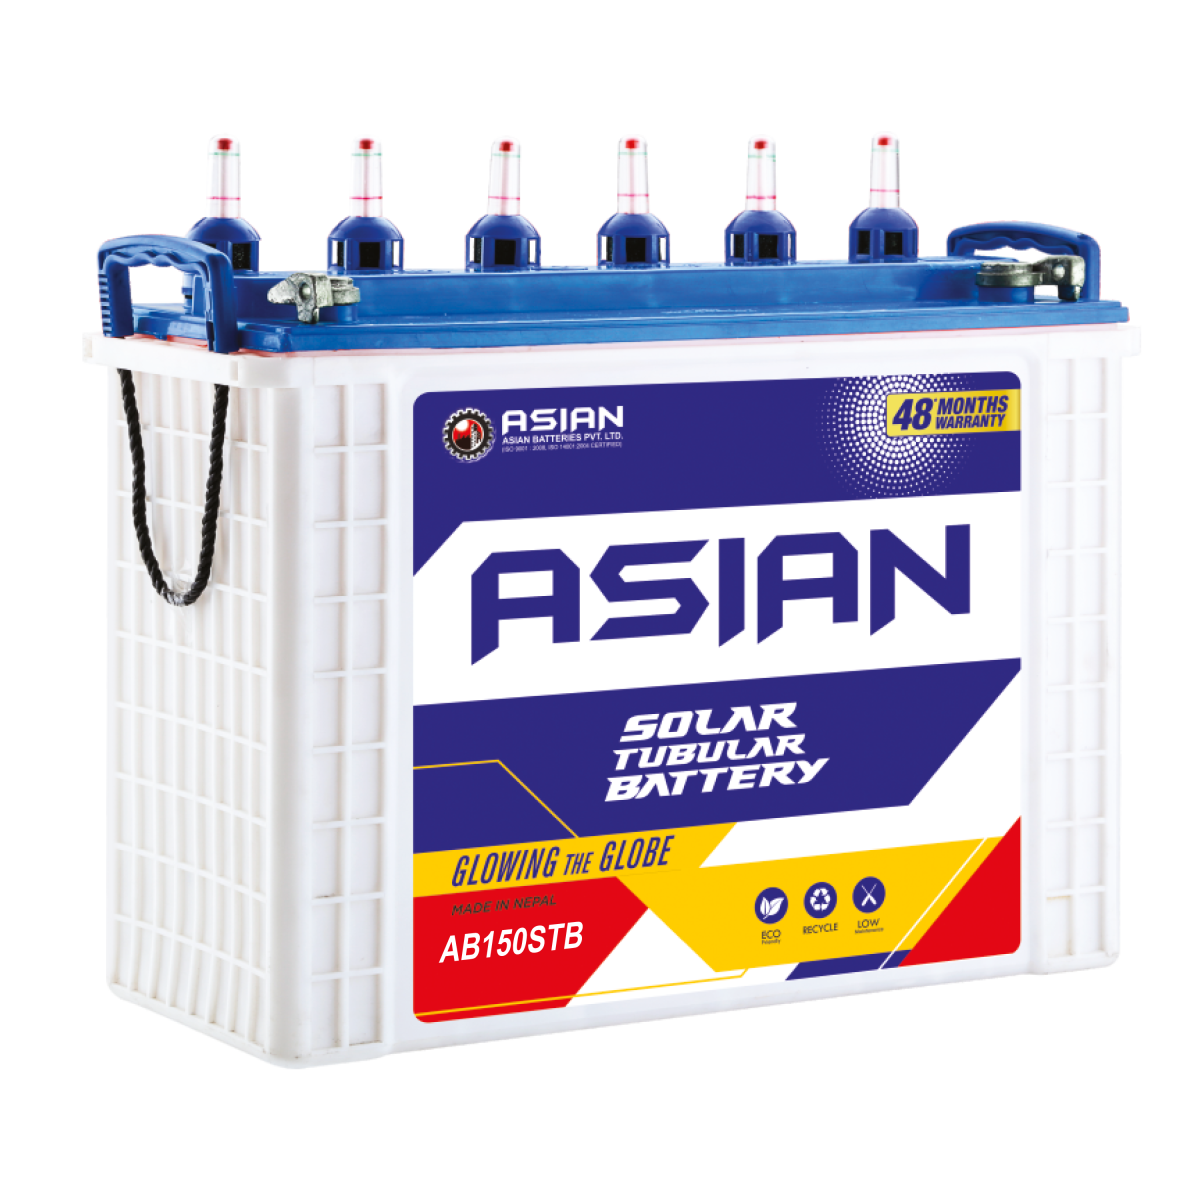 asian-battery-solar-tubular-batteries-high-stability